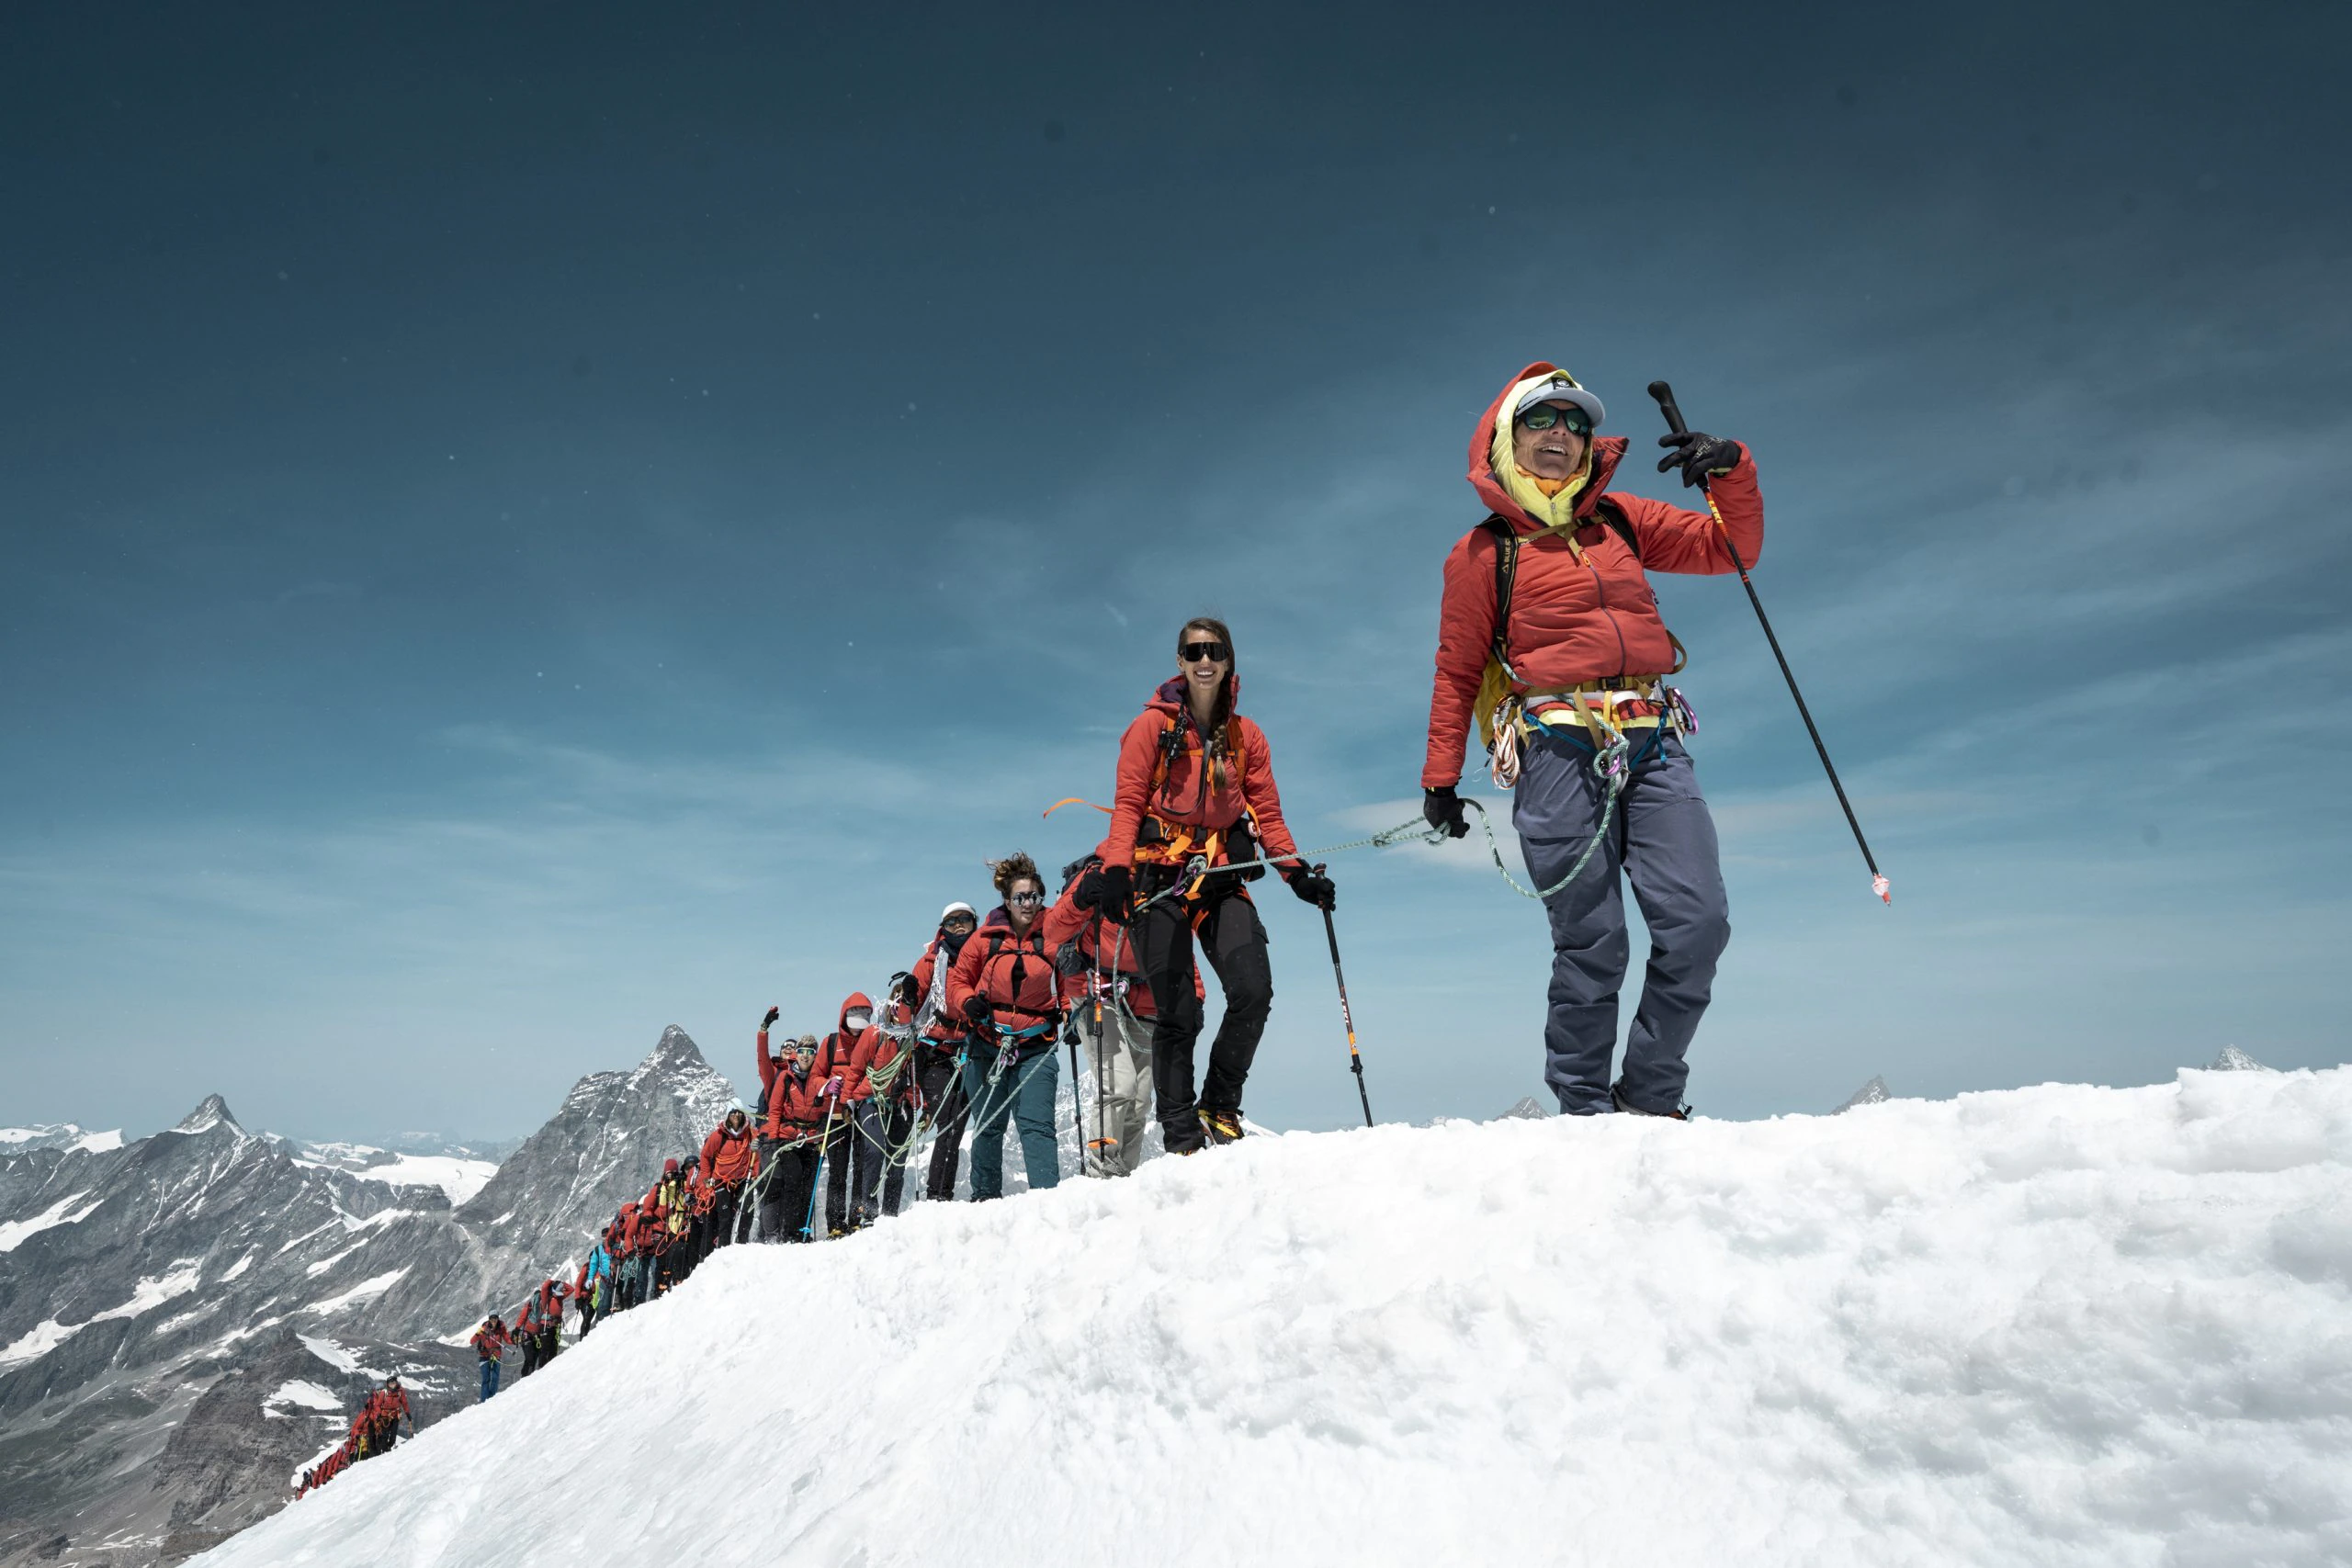 Команда "100% Women" на вершині гори Брайтхорн (Breithorn, 4164 метри)). Фотографії Schweiz Tourismus / Nicole Schafer